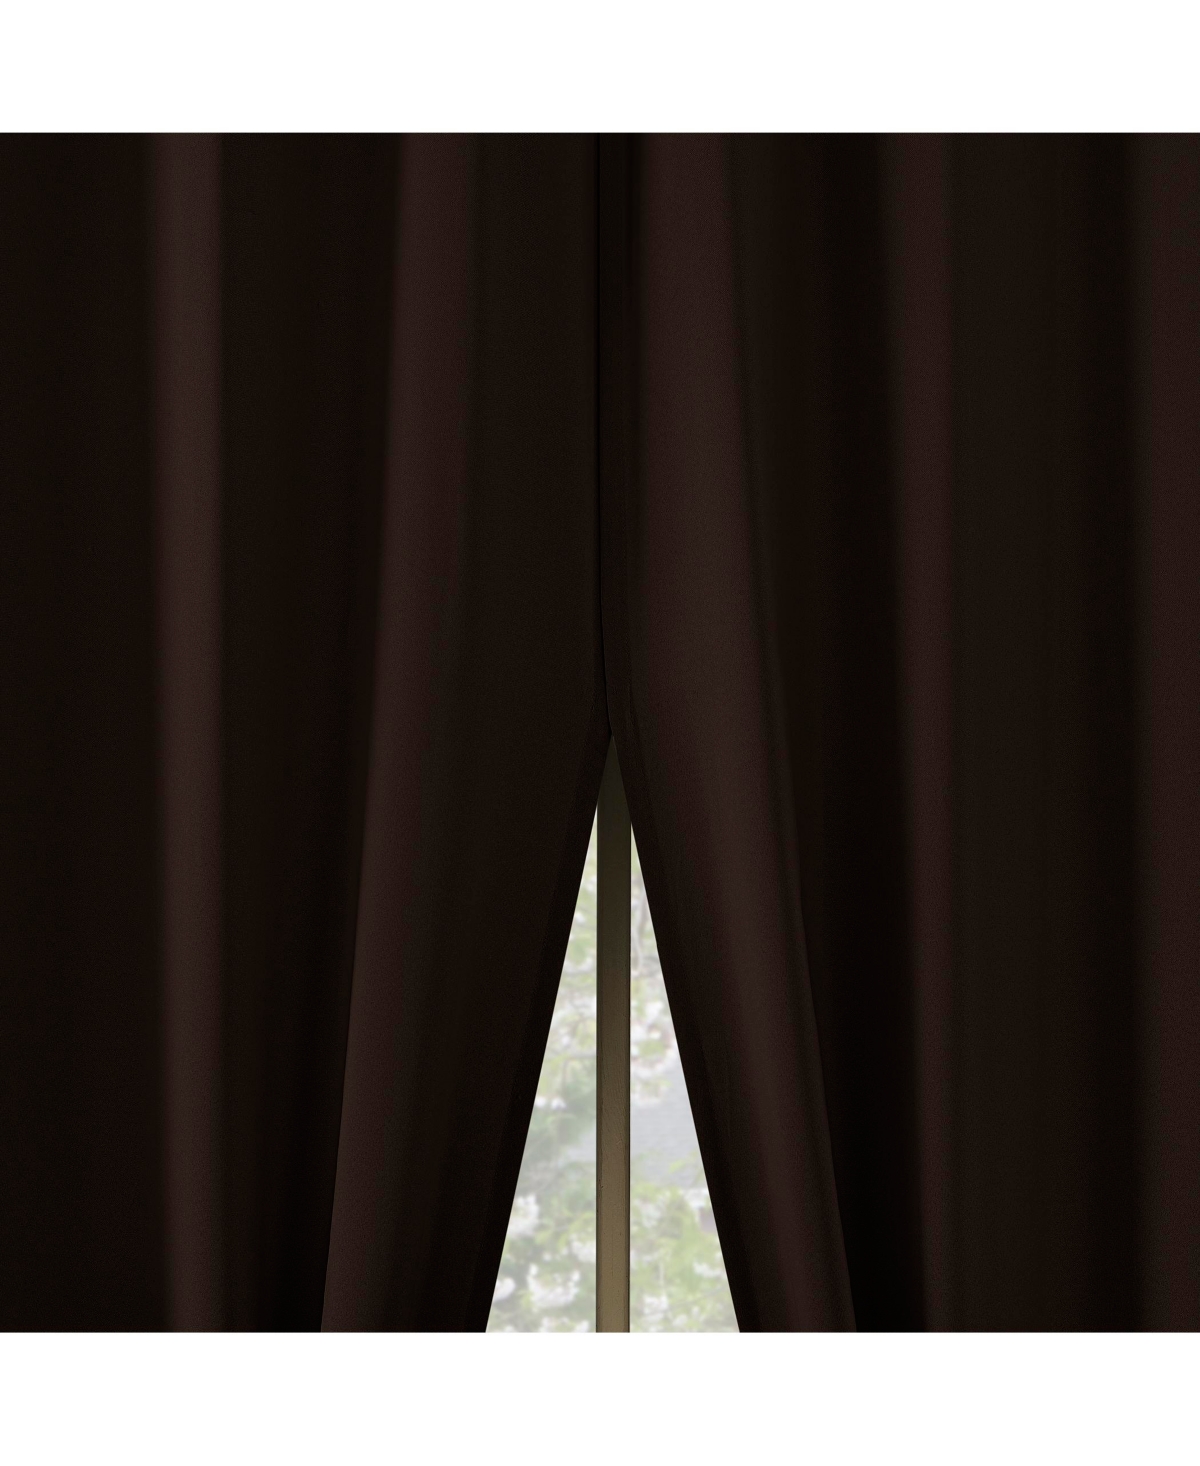 Brandon Magnetic Closure Room Darkening Grommet Curtain Panel Pair - Vintage blue